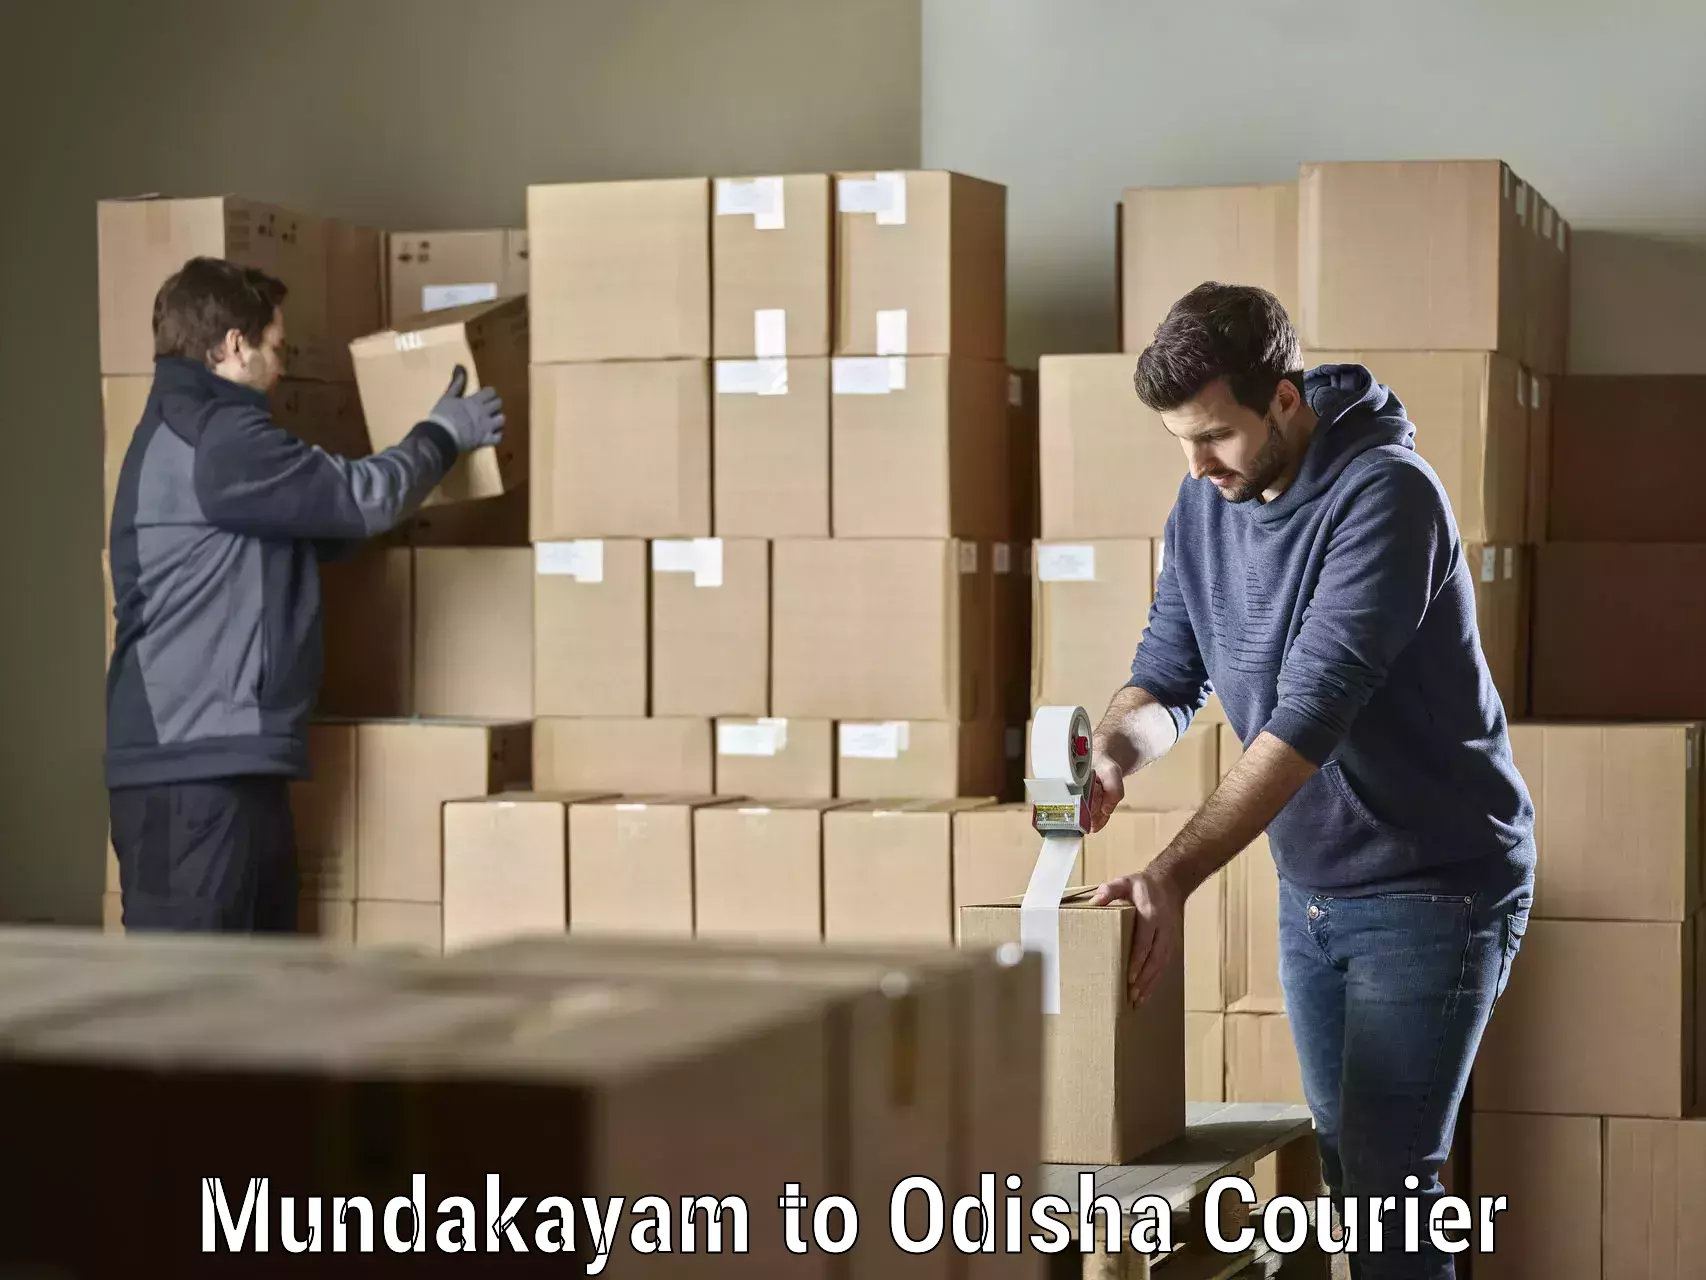 Digital courier platforms Mundakayam to Sohela